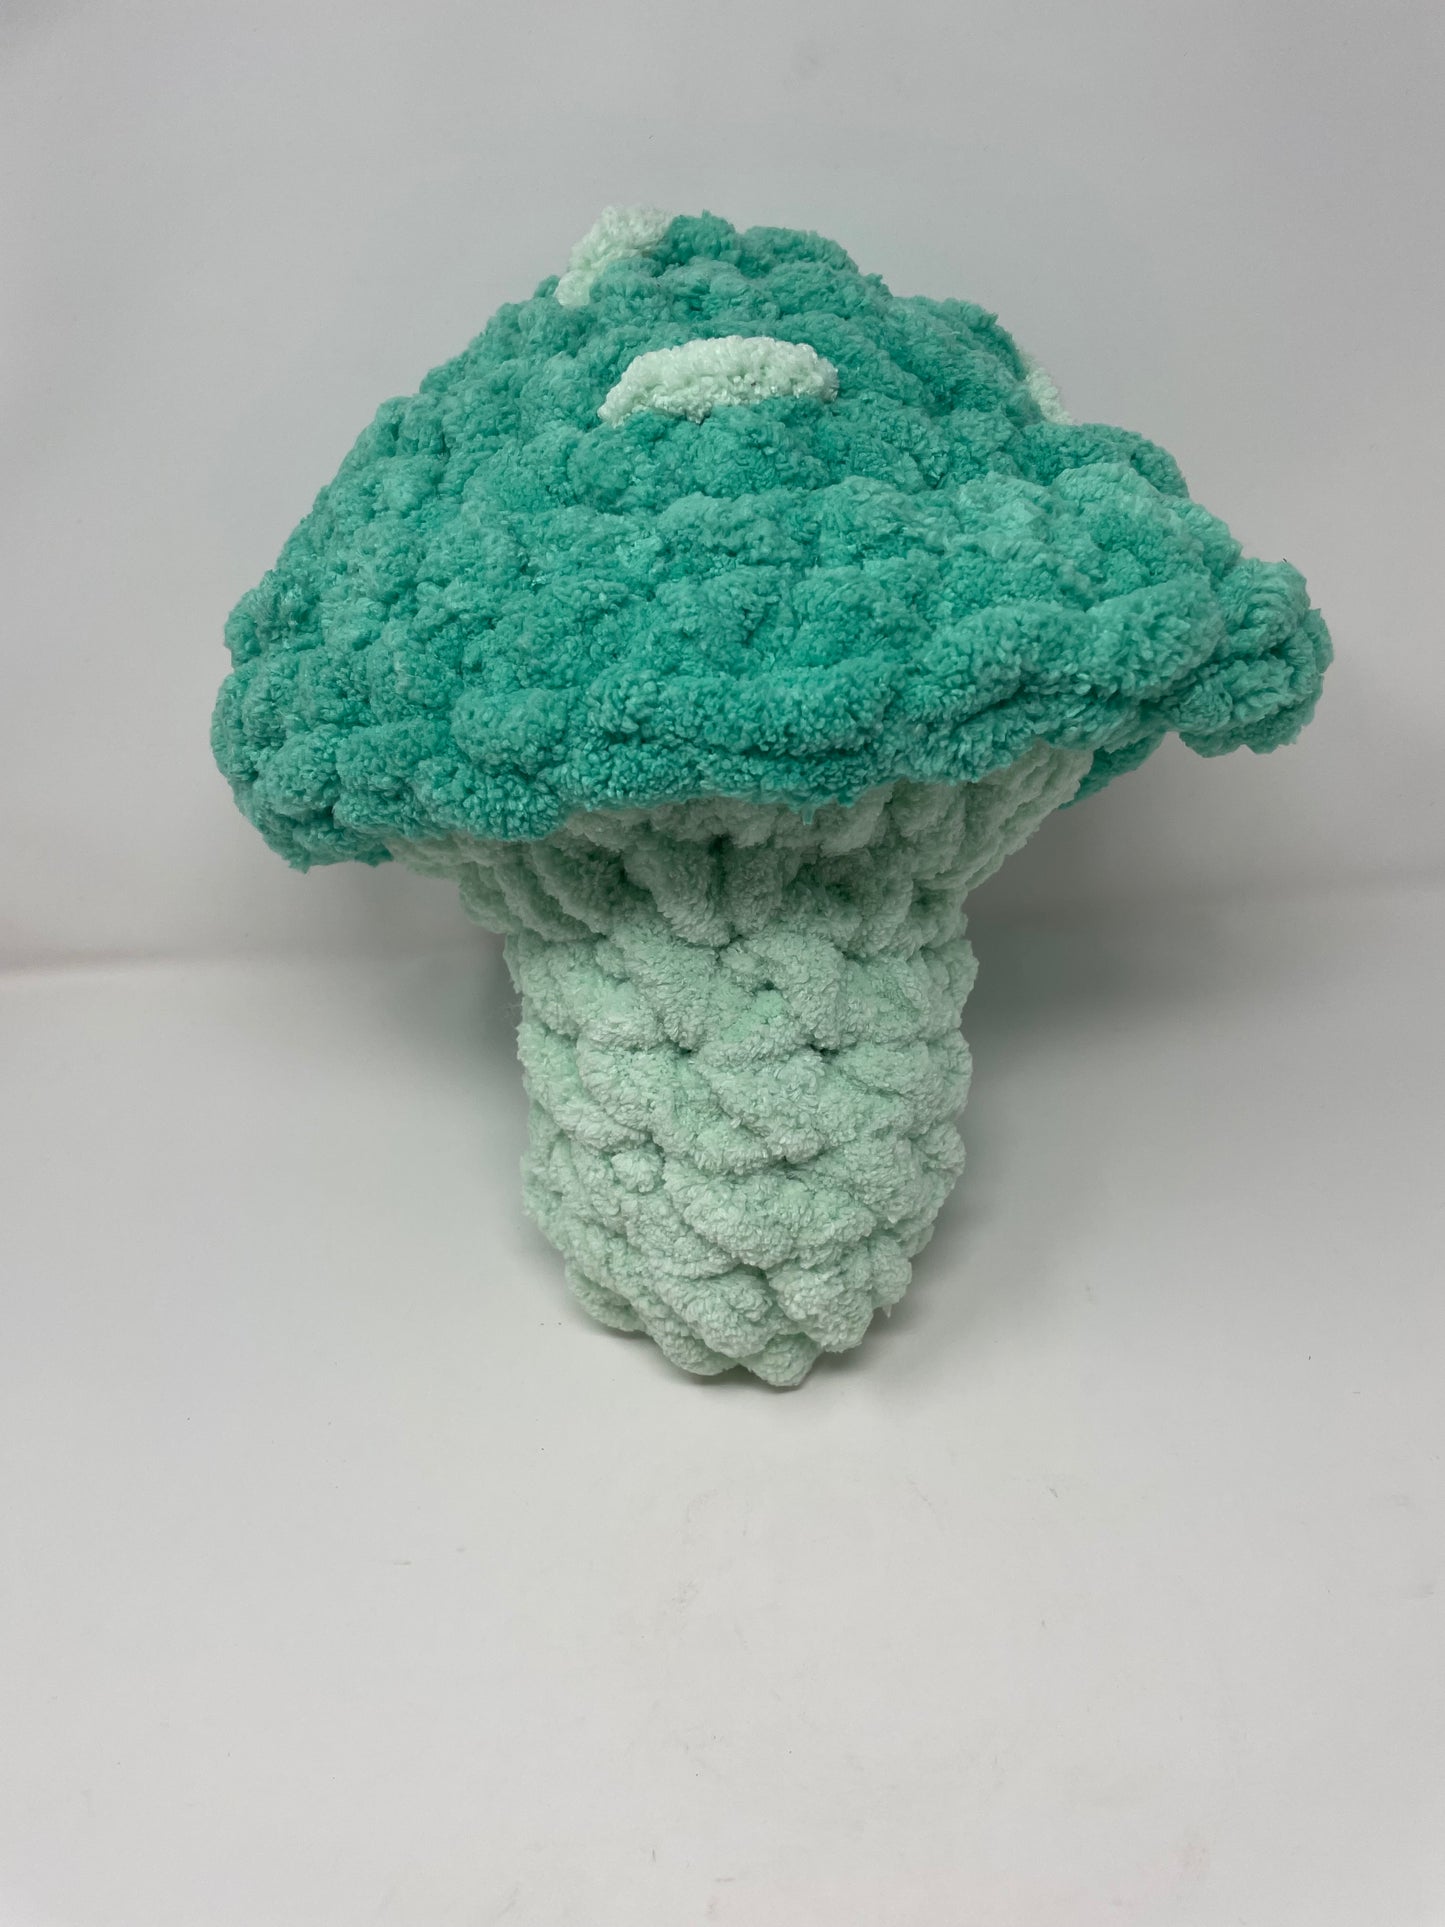 Green Mushroom Pillow